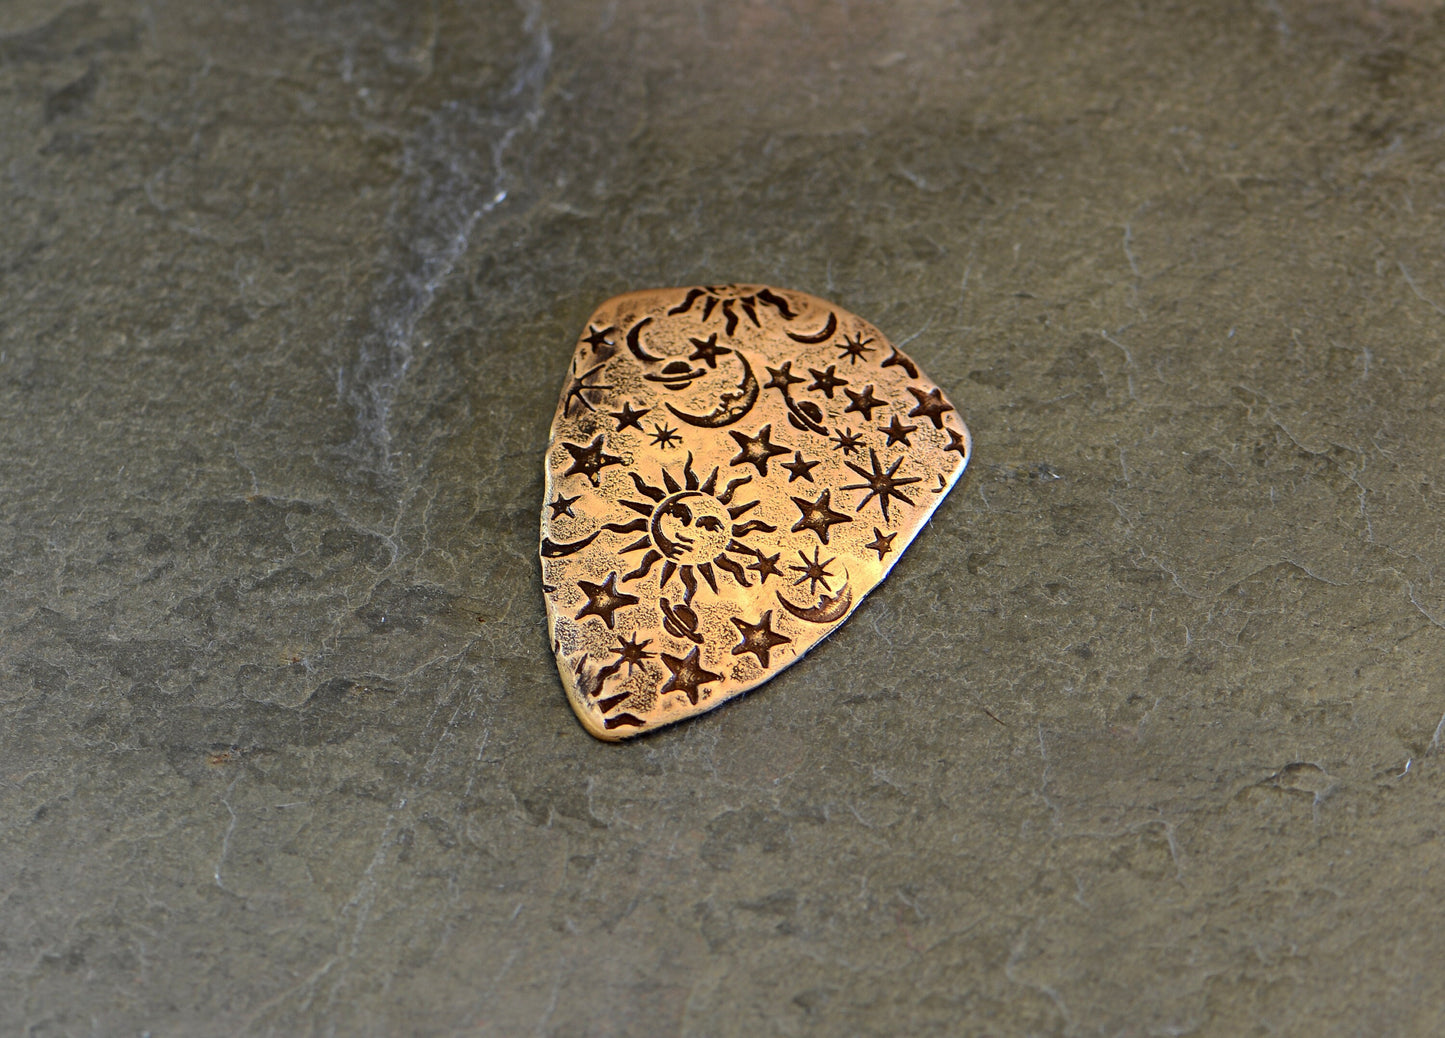 Bronze shield shape guitar pick with sun moon and stars